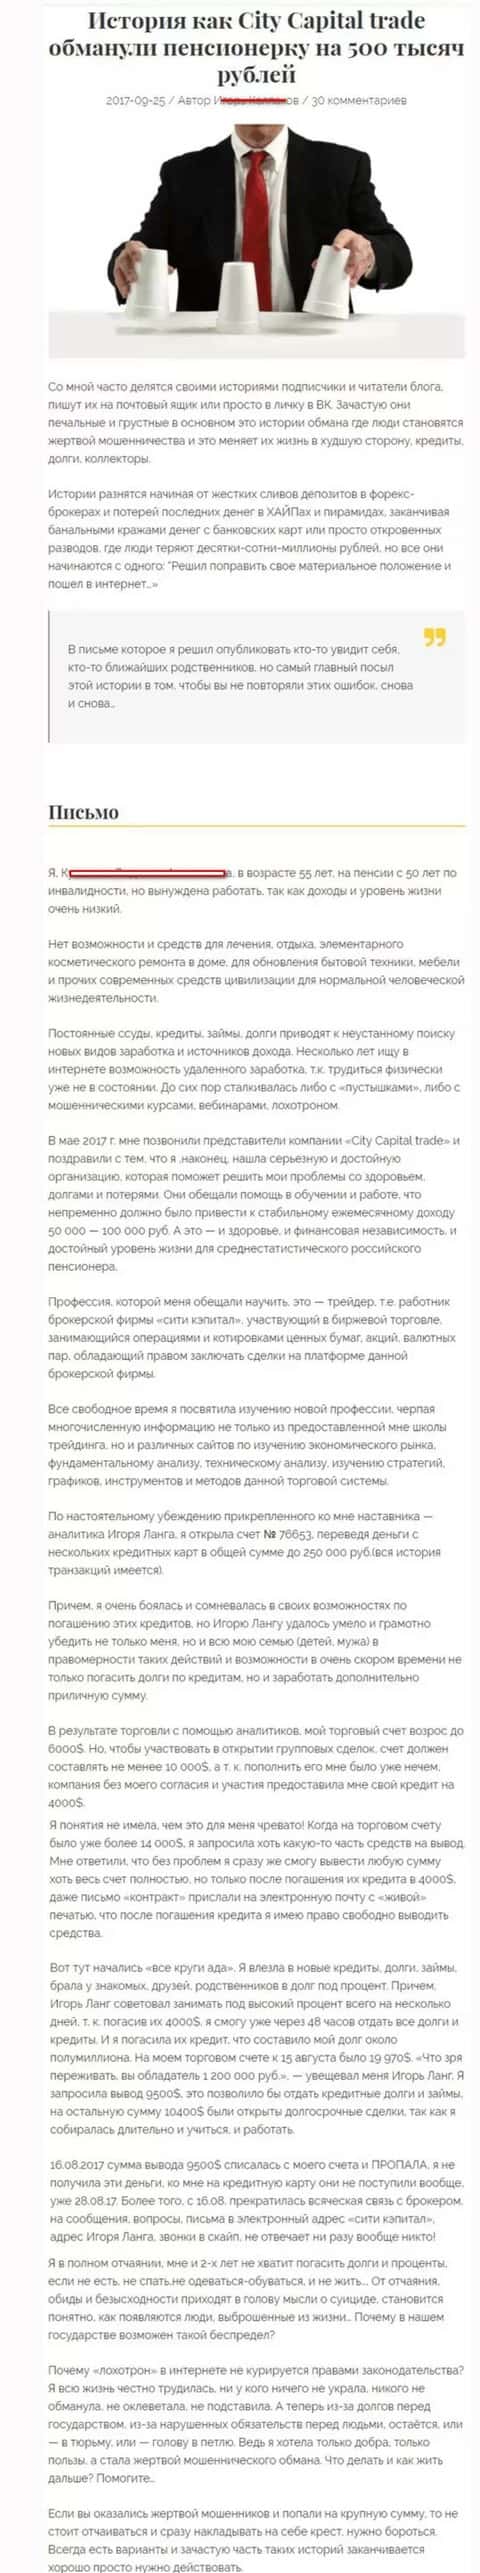 СитиКапитал Трейд слили пенсионерку - инвалида на сумму 500000 российских рублей - МОШЕННИКИ !!!